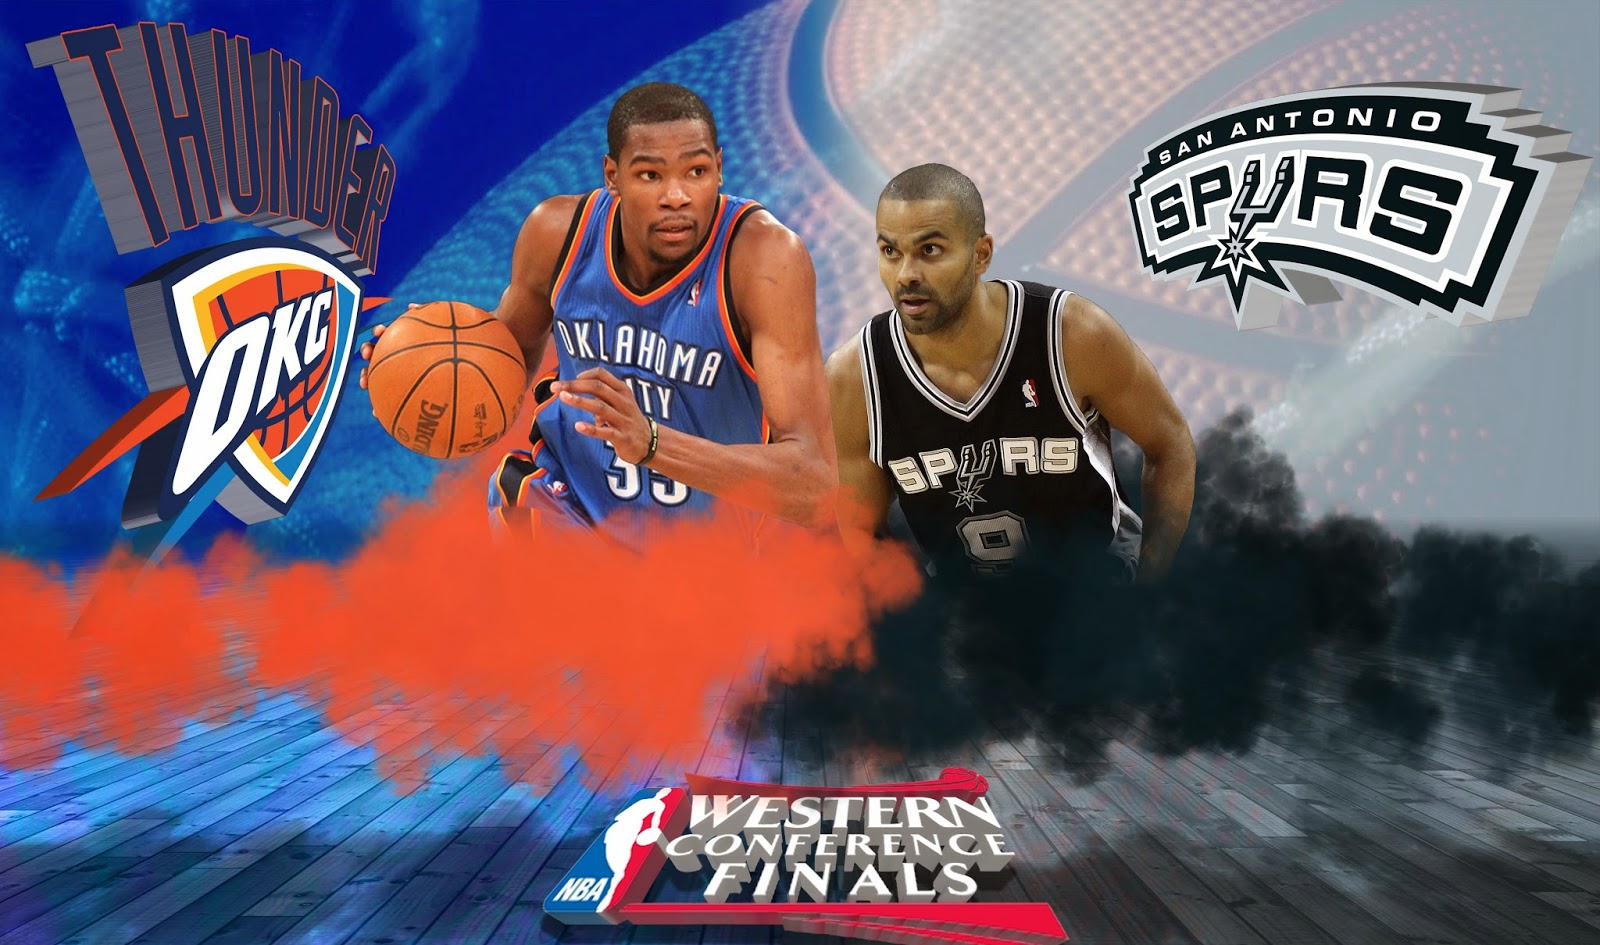 2014 NBA Playoffs Summary Basketball-Referencecom